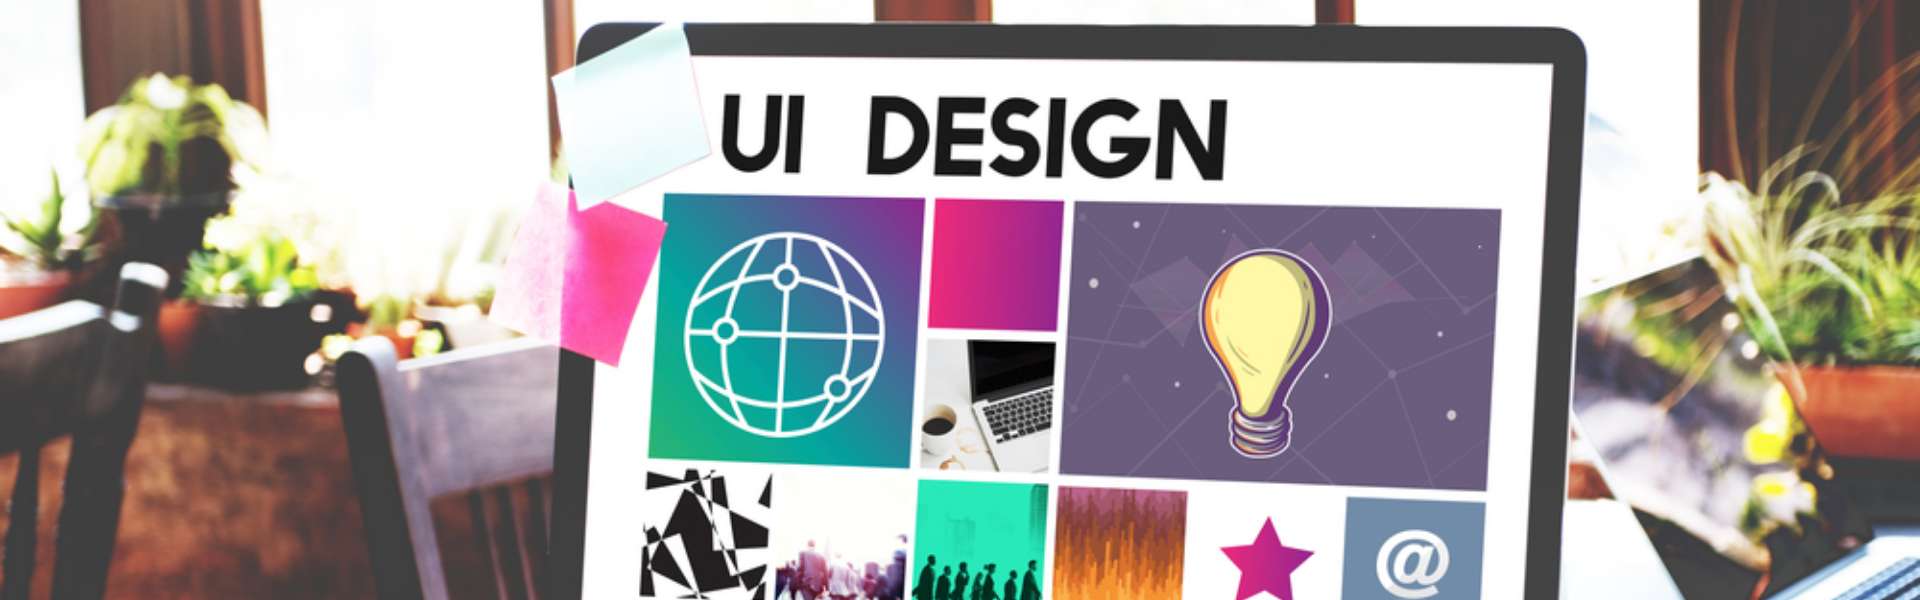 UI Design Factors to improve user experience